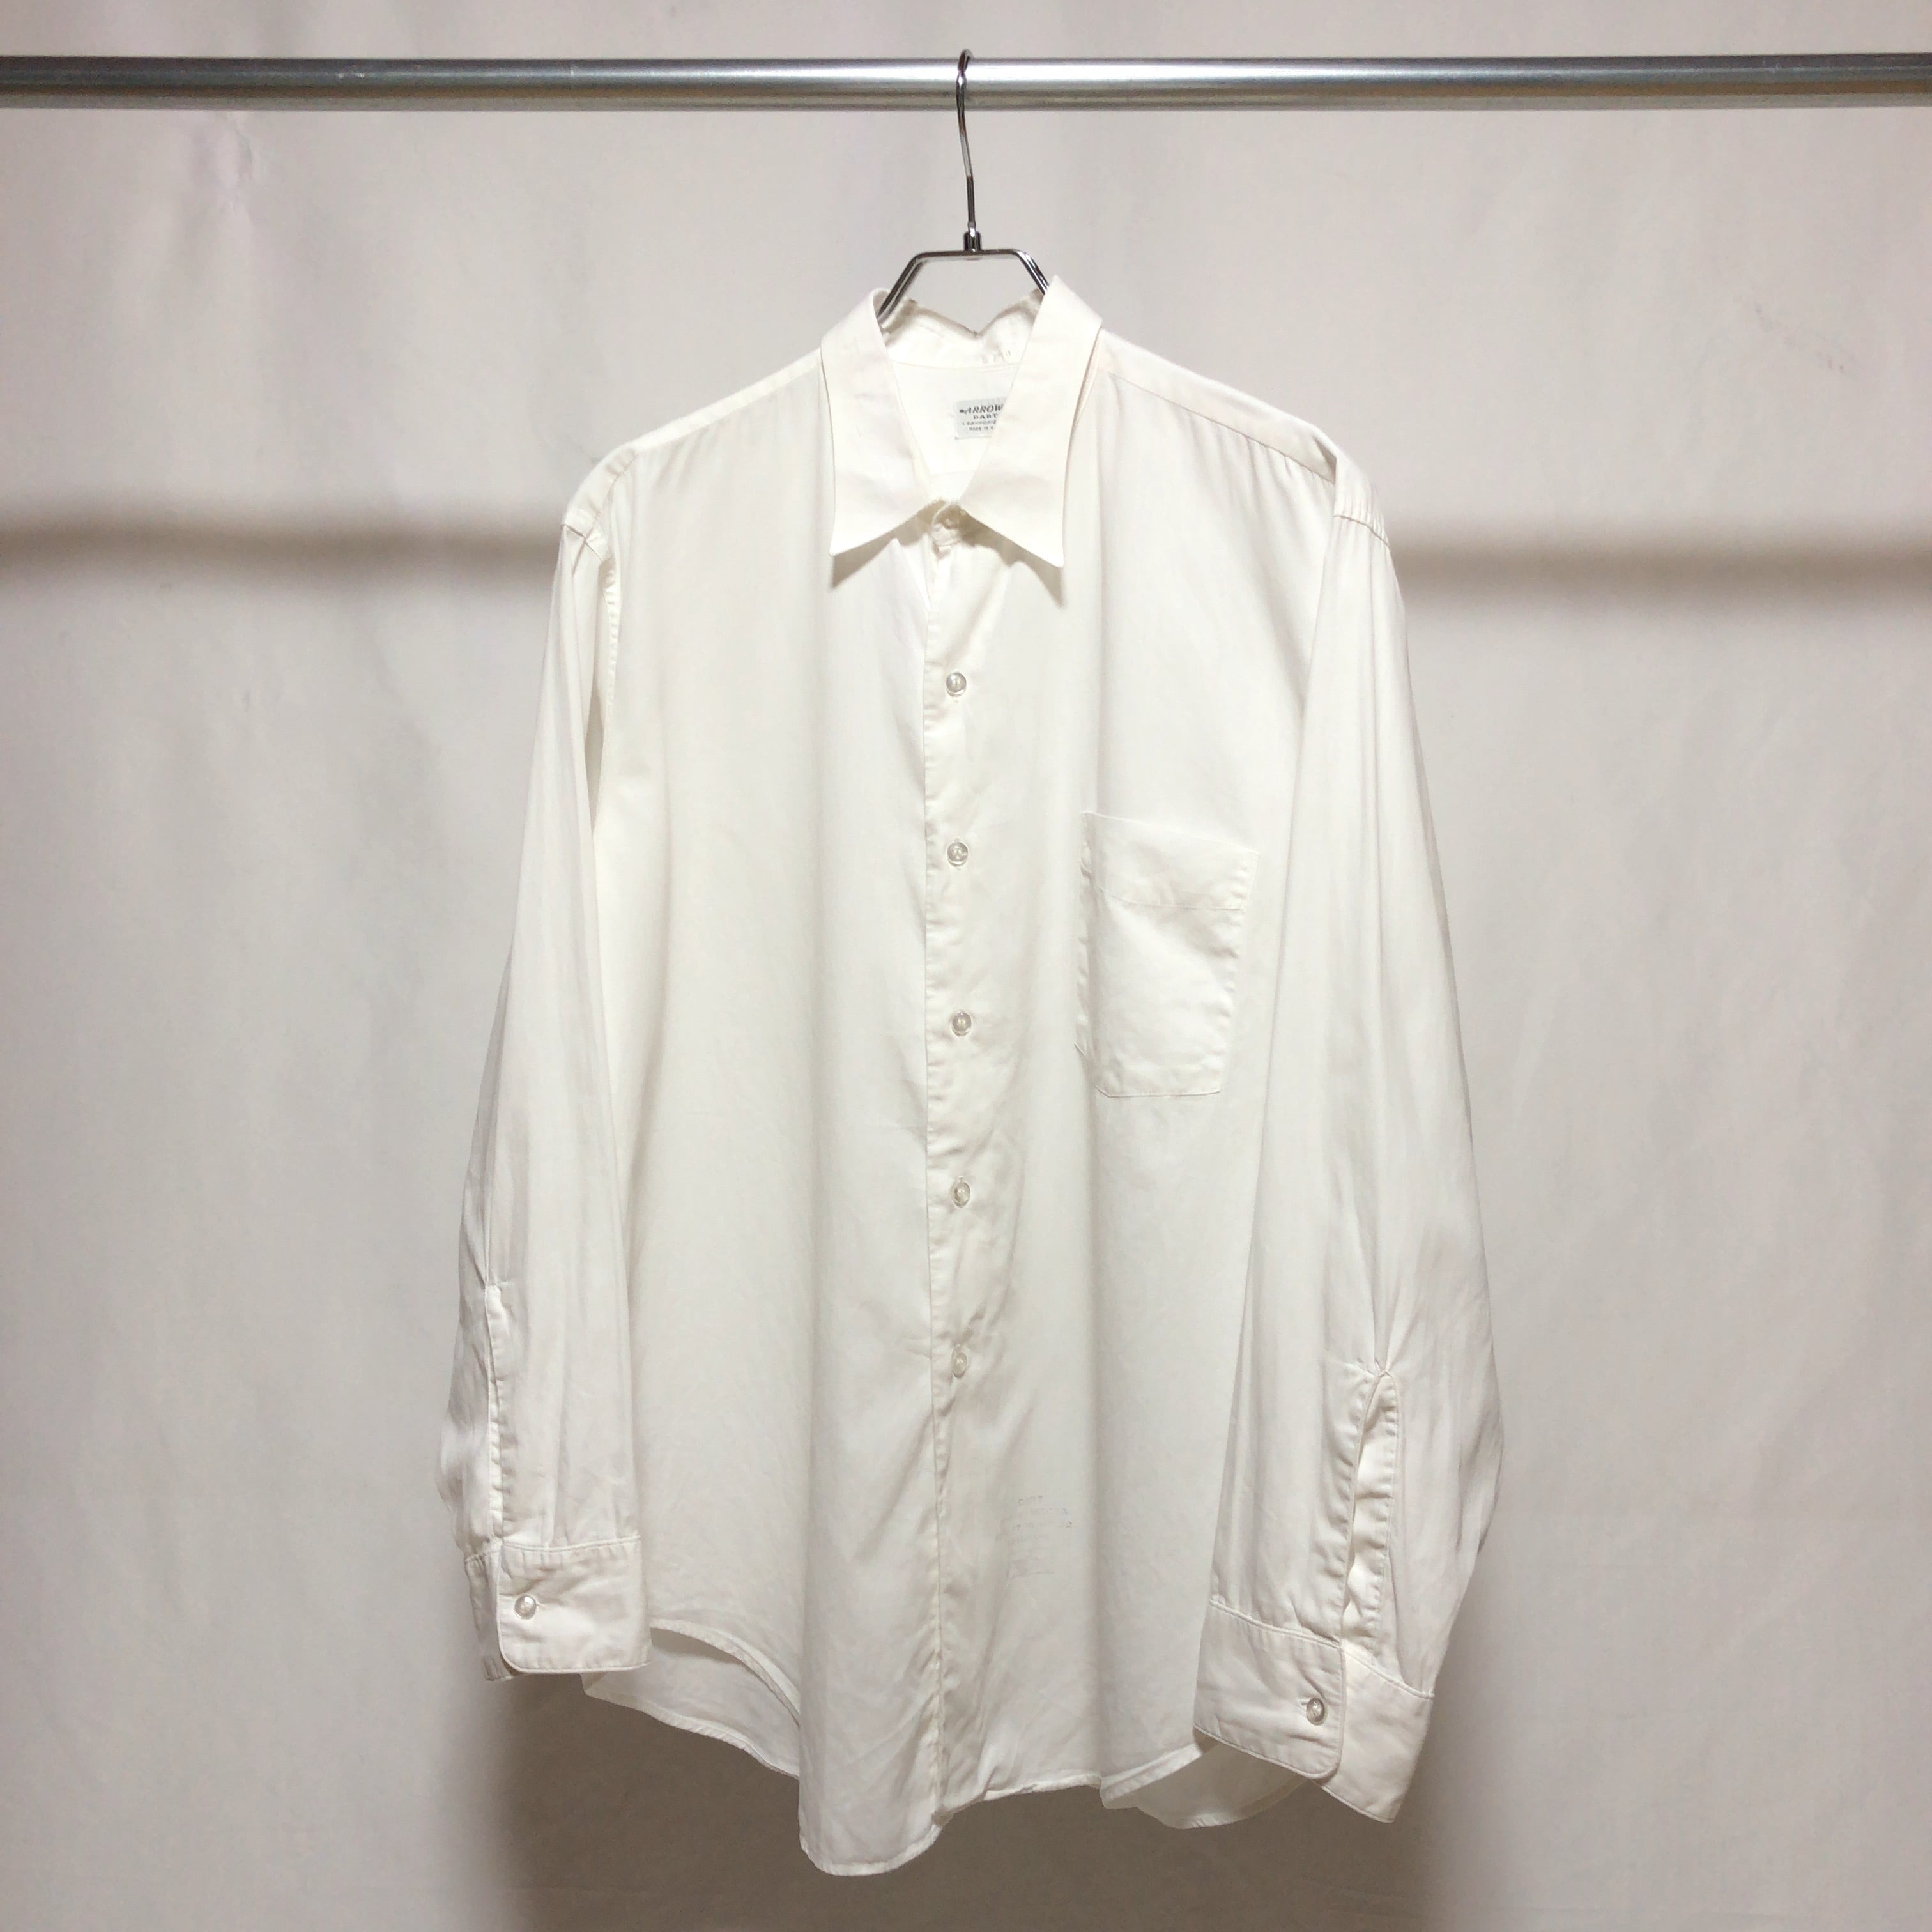 ARROW / -60's Vintage Cotton Dress Shirt / Made in USA  /アロー/ヴィンテージ/ドレスシャツ/ホワイトシャツ/アメリカ製/50年代/60年代